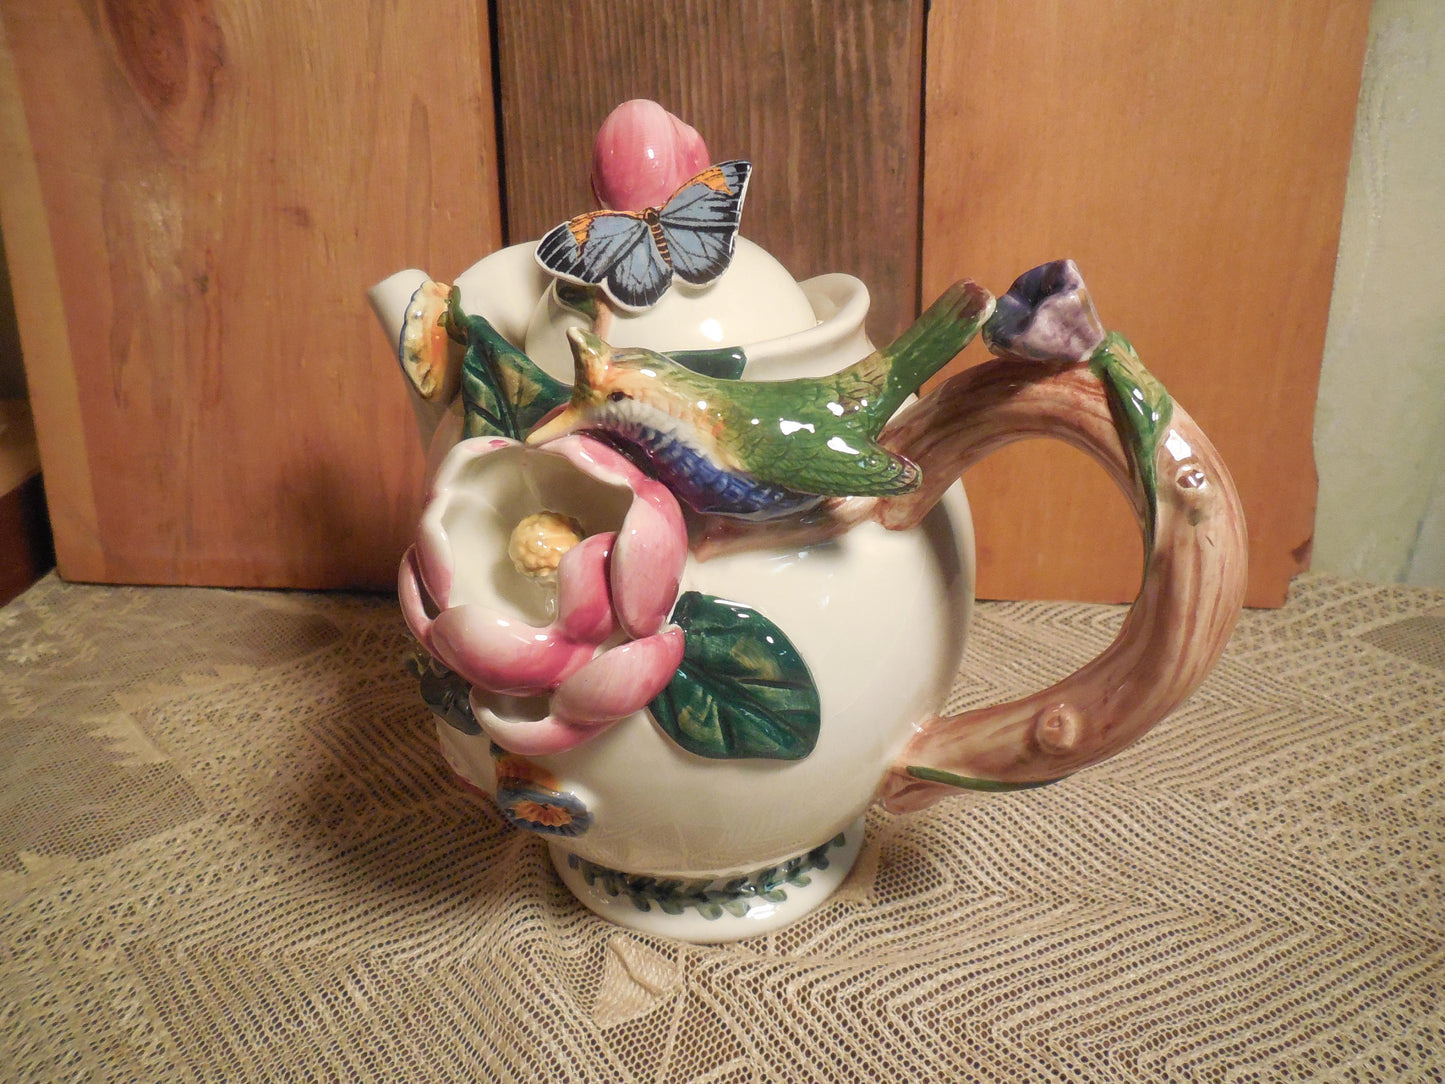 Teapot Gift Basket, Three-dimensional Floral Ceramic Tea Pot, scones, shortbread, herbal tea, infuser, gift set, basket tray